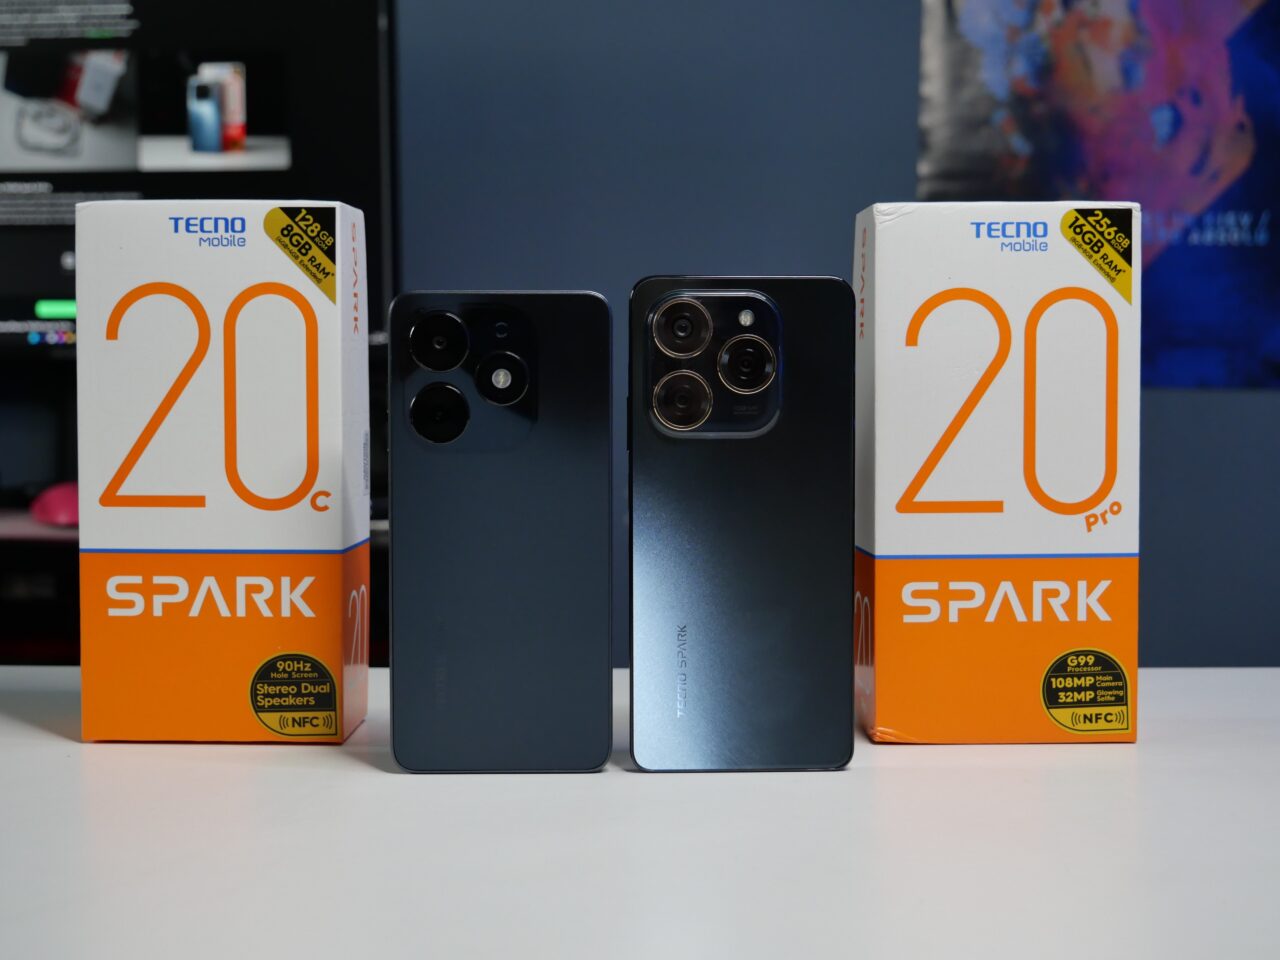 Dwa smartfony Tecno Spark 20C i 20 Pro stojące obok swoich pudełek na biurku.